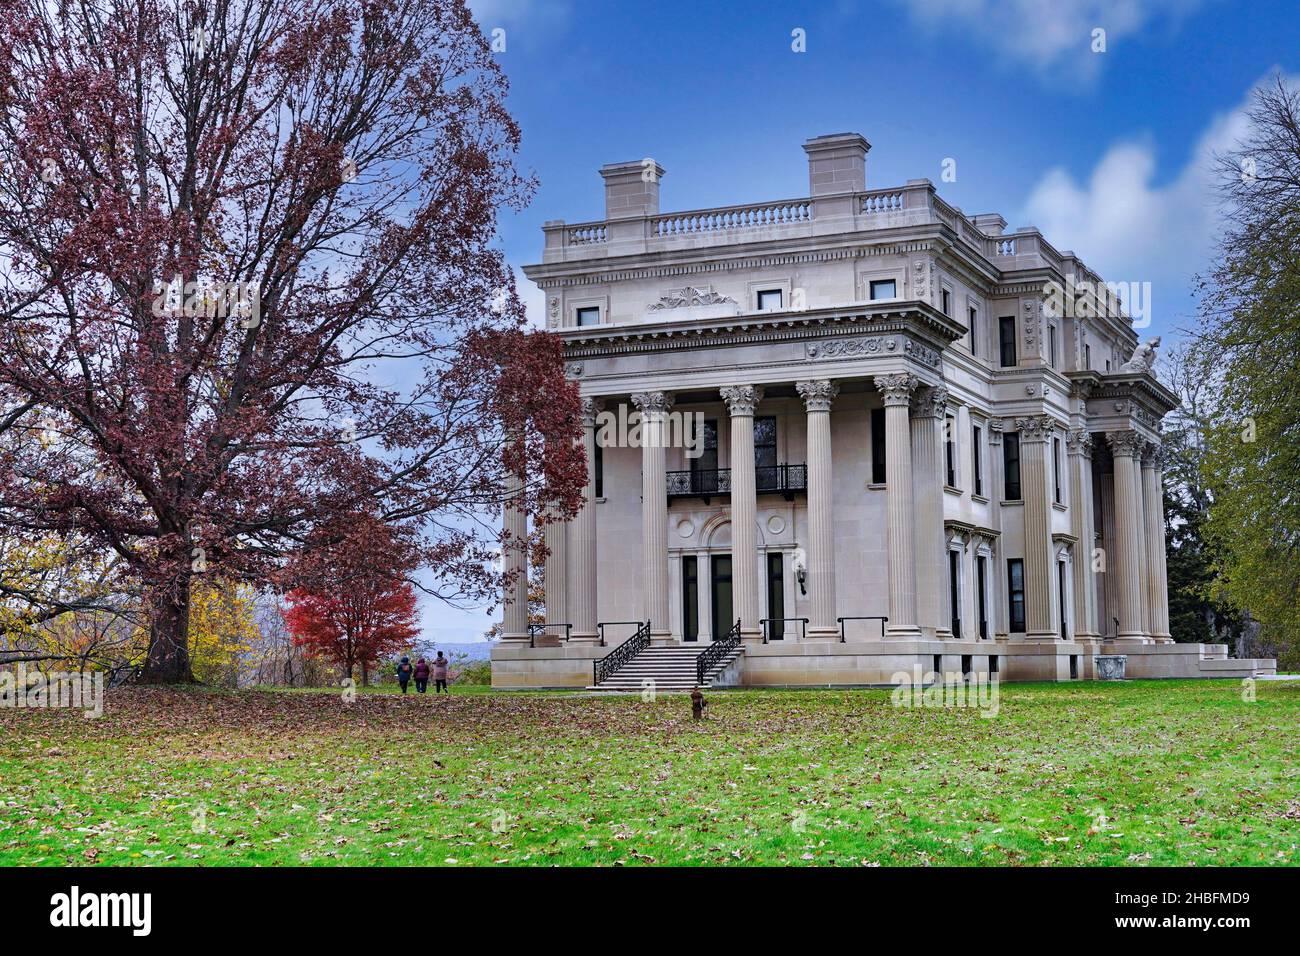 United States National Park Service's historic Vanderbilt Mansion, in a ...